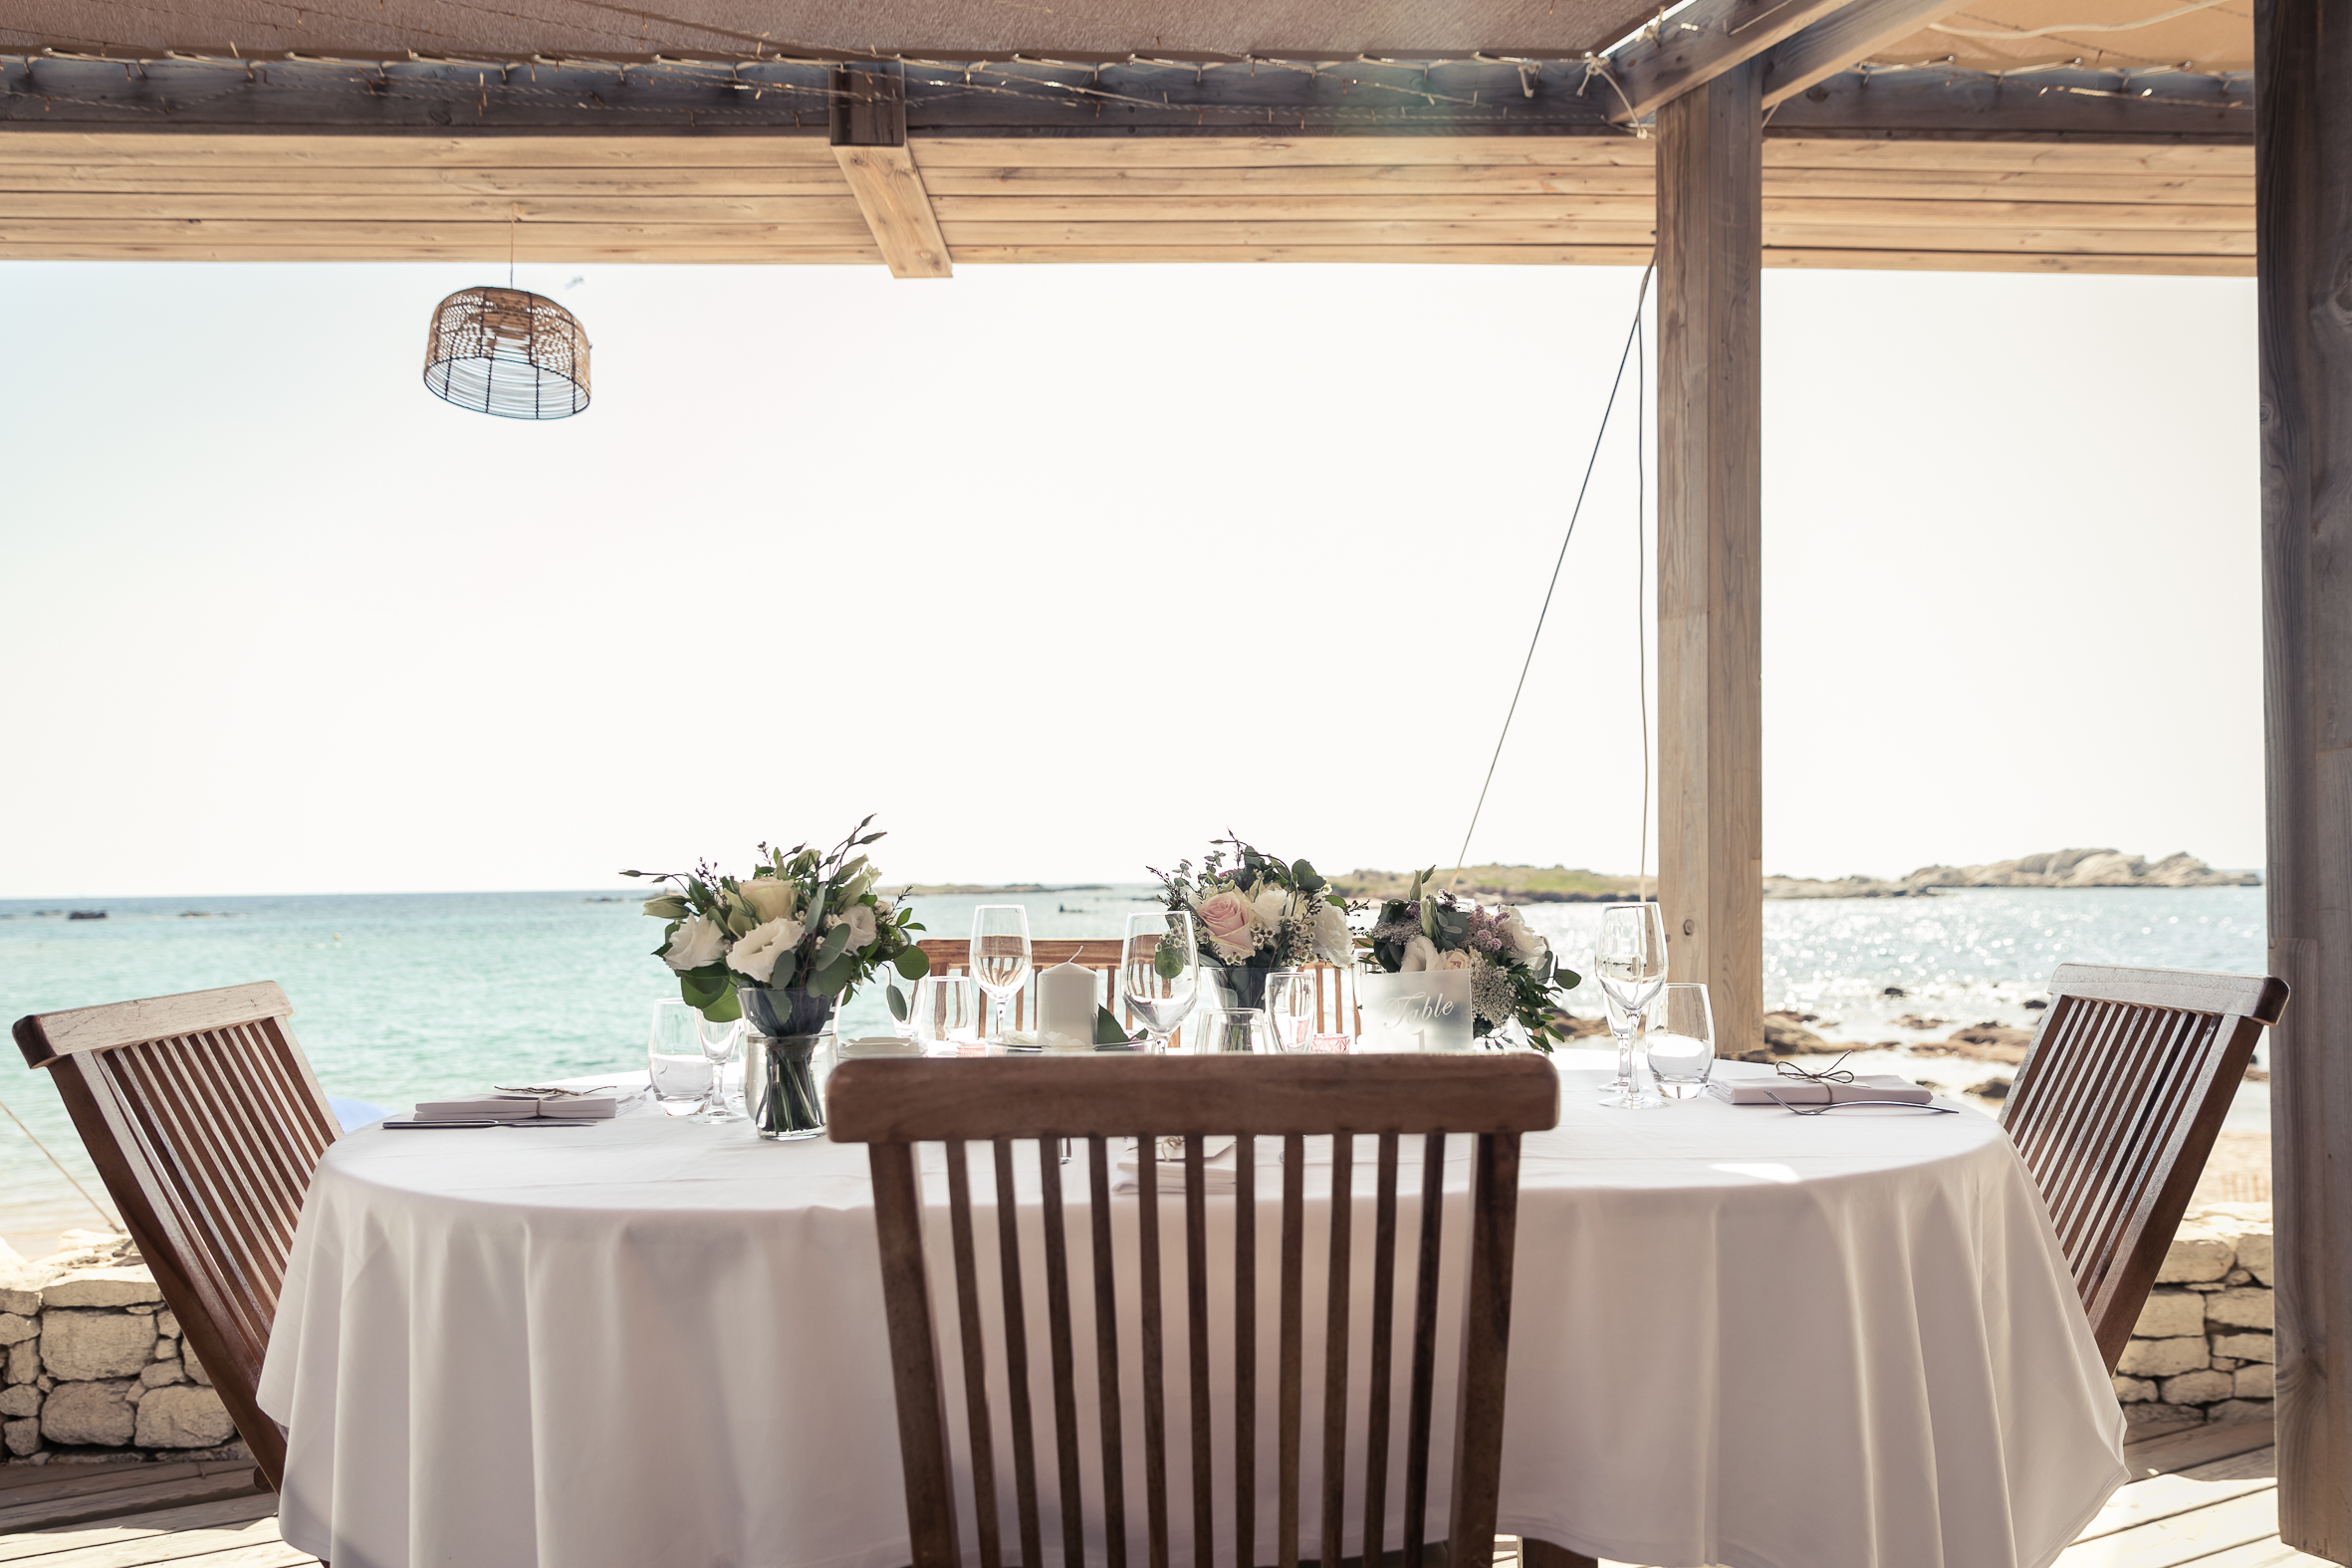 Restaurant mariage vue mer-mariage bord de l'eau-mariage Corse-Mariahe Bonifaccio-mariage La tonnara